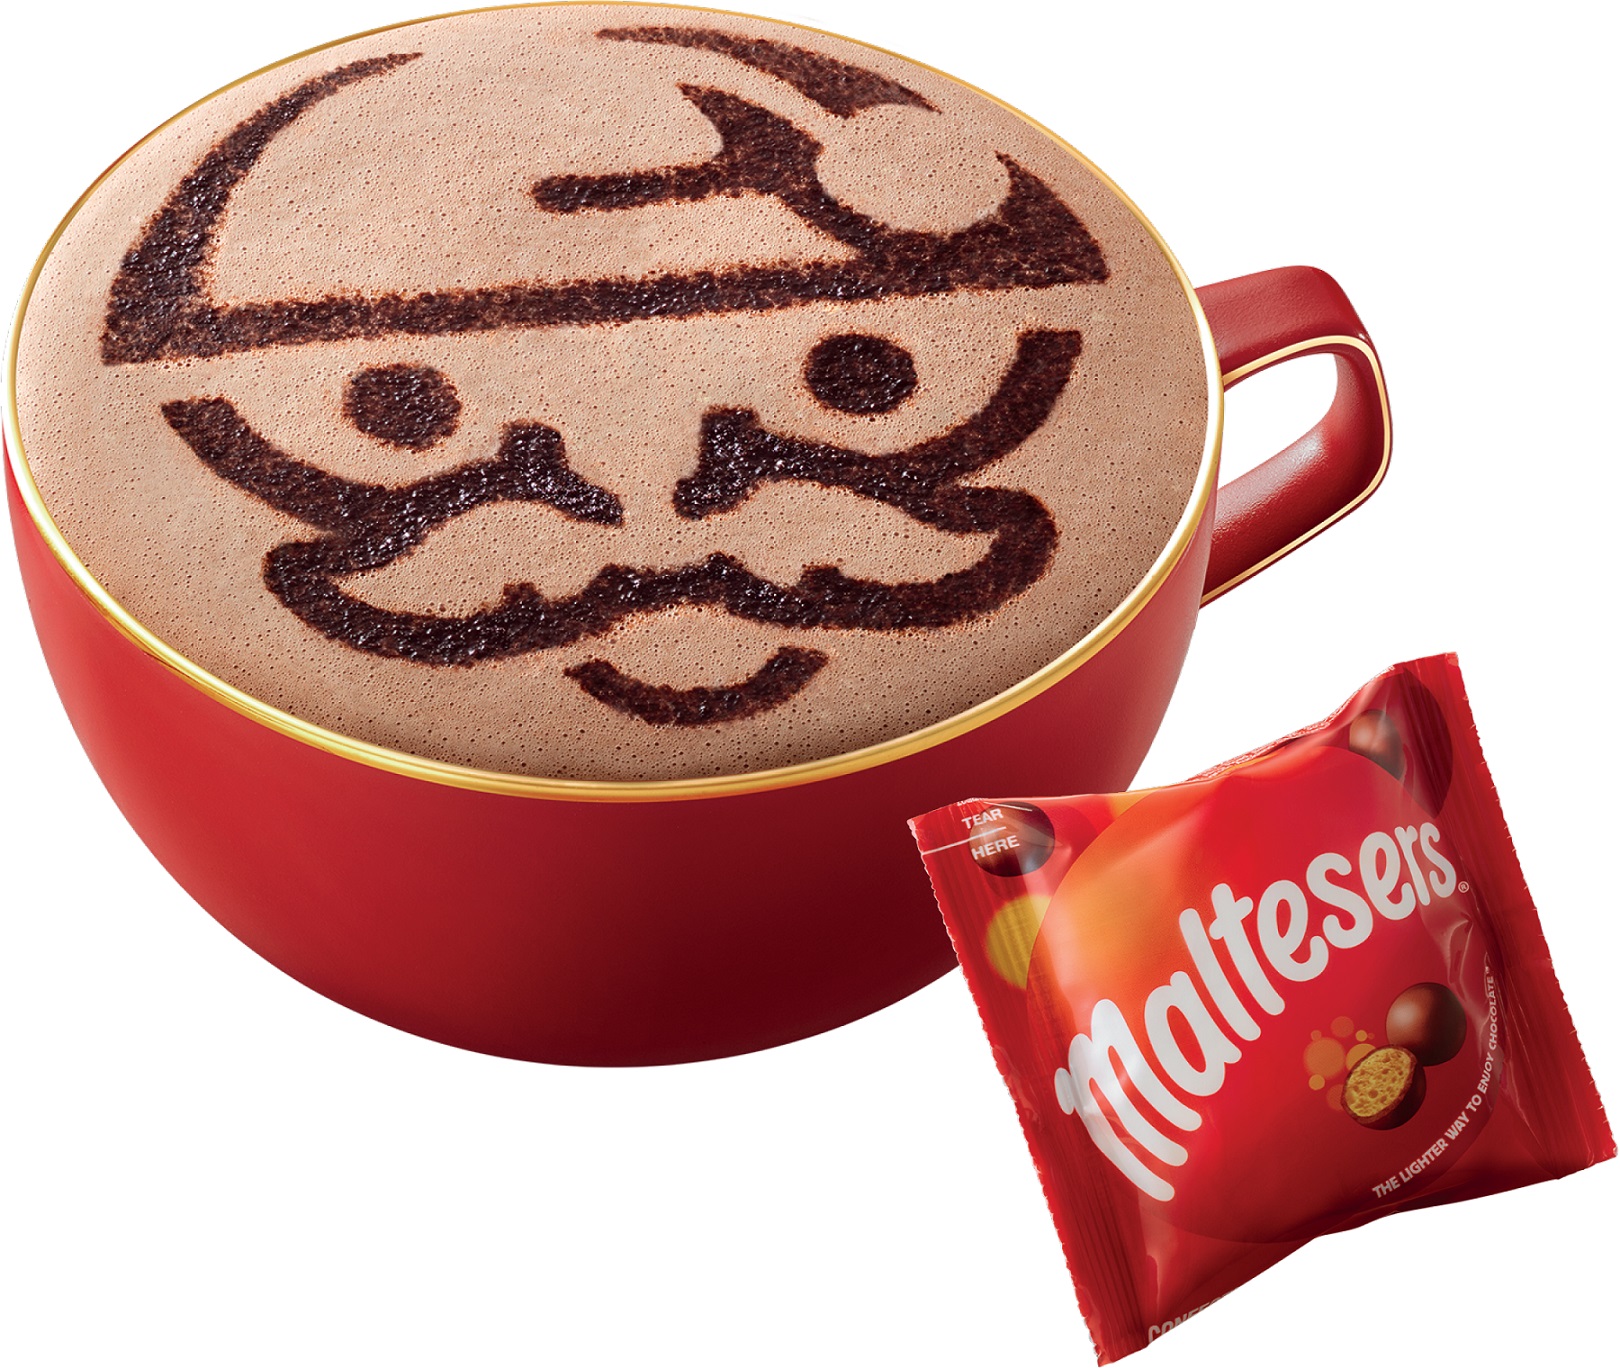 McCafe Maltesers Hot Chocolate.jpg